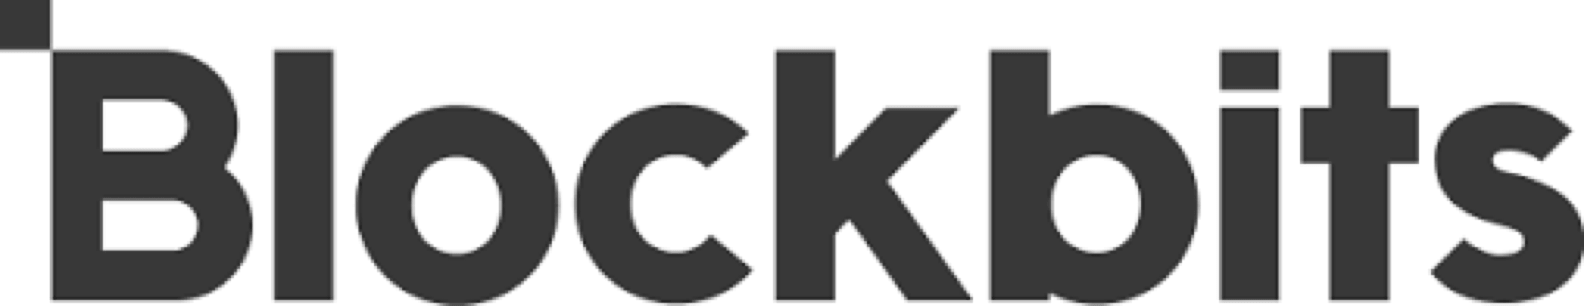 Blockbits | Decentralized Crowdfunding Platform Logo